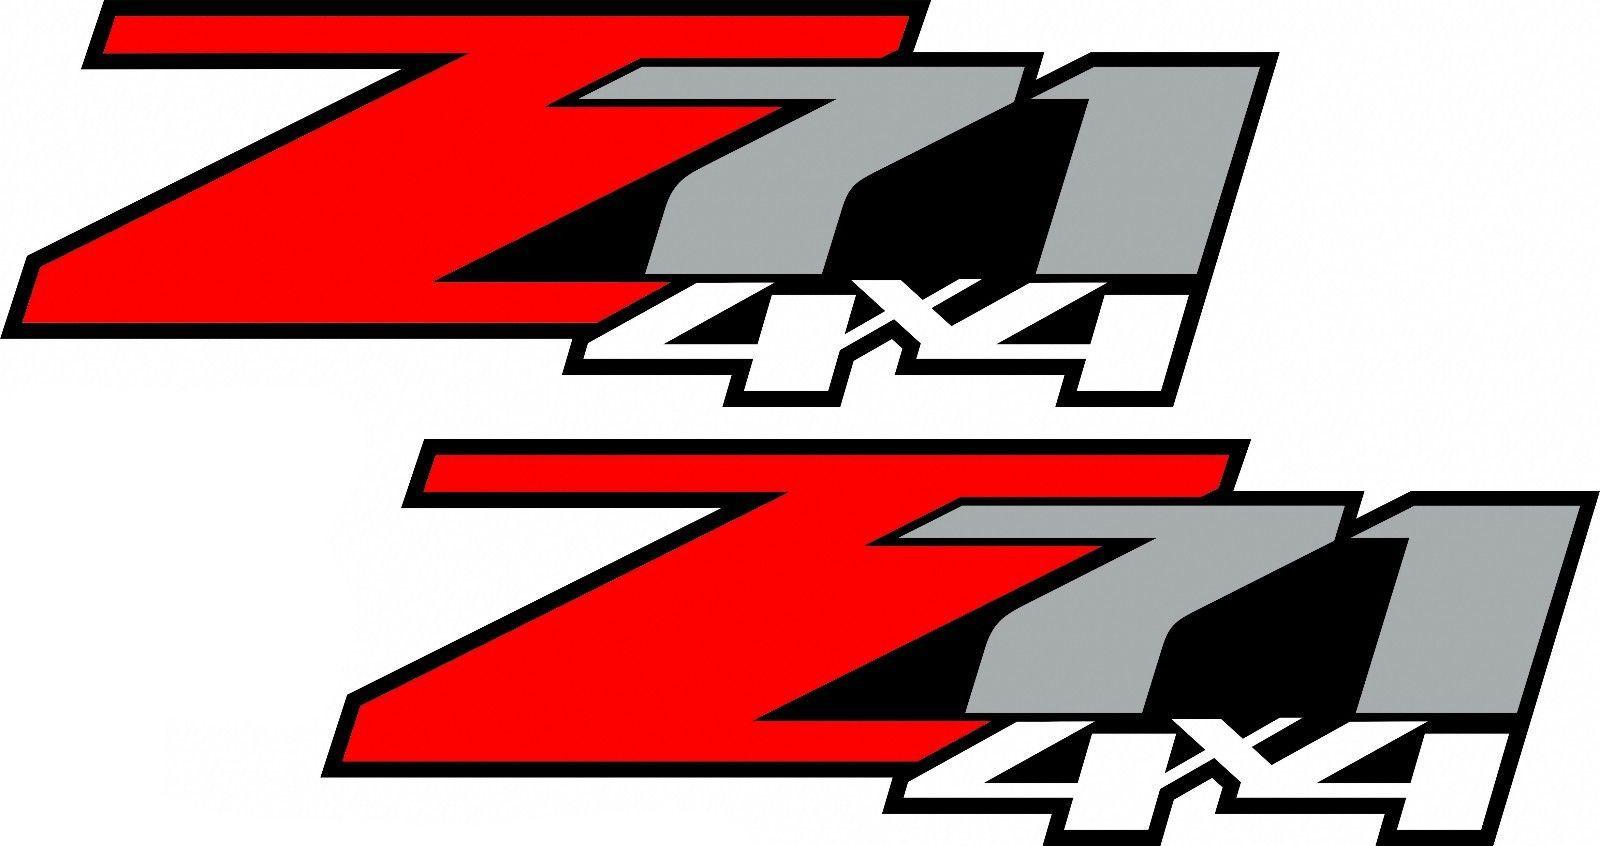 GMC Z71 Logo - Product: 2 Chevy Z71 Off Road 4x4 Truck Decal/Sticker X2